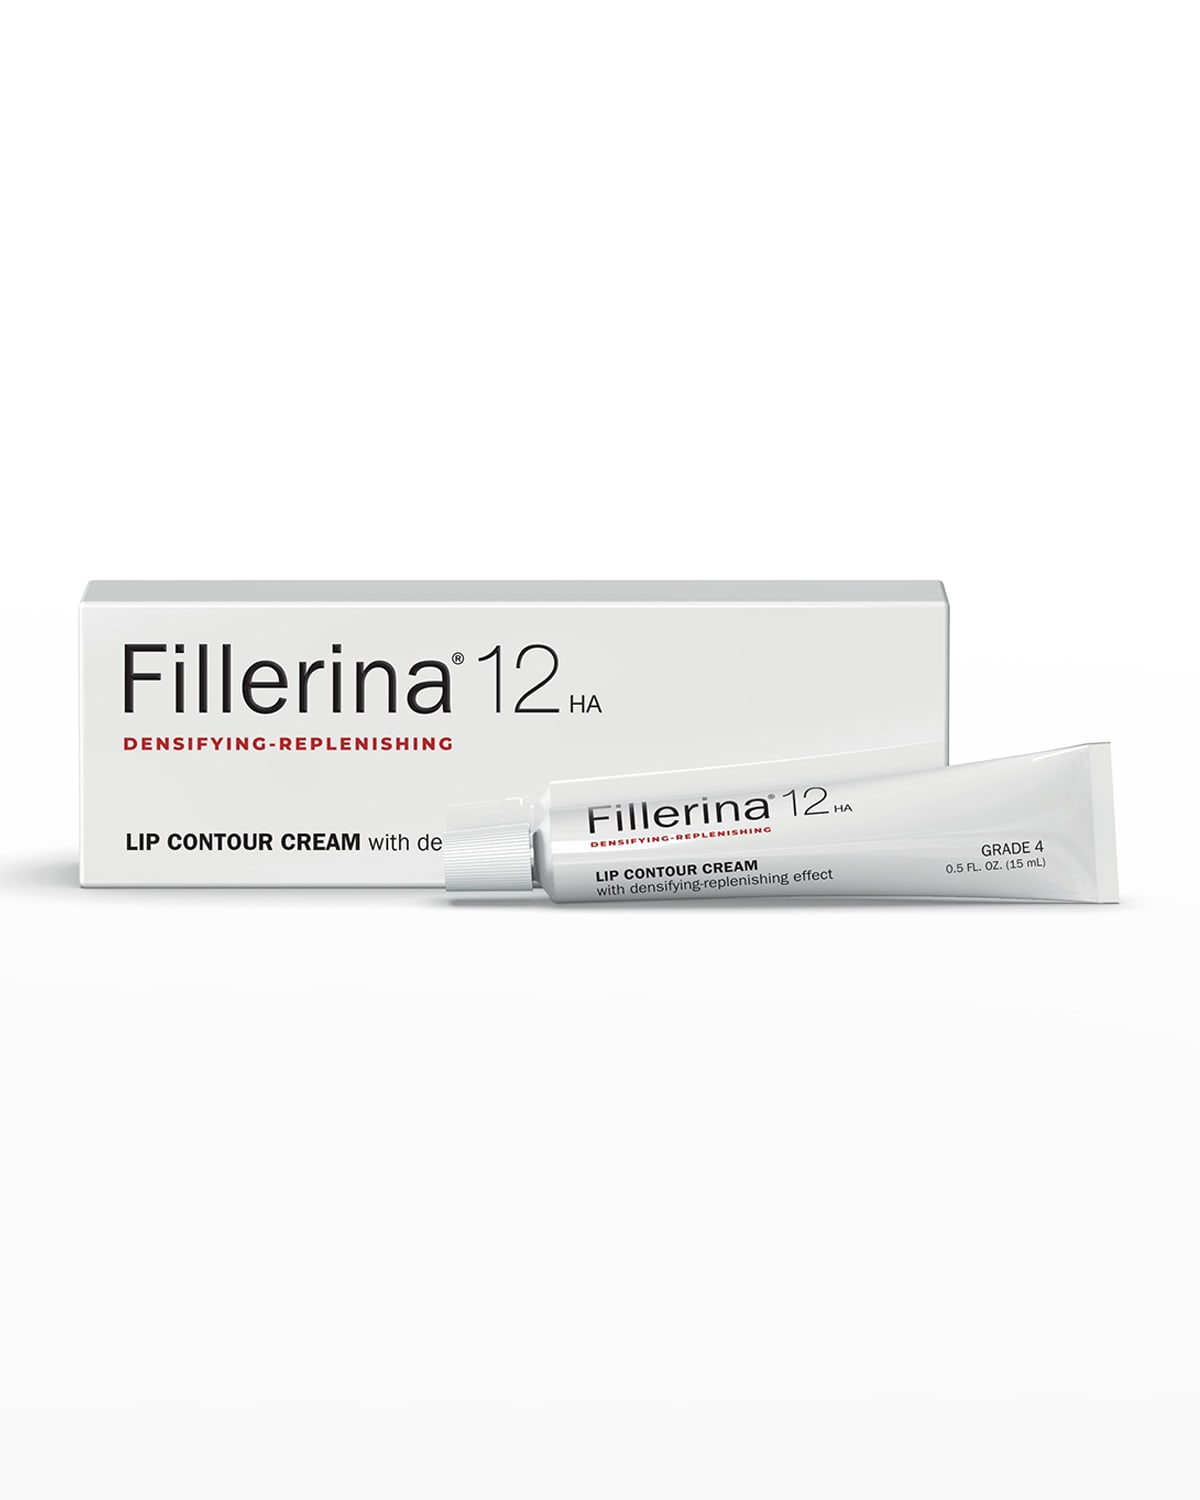 Fillerina 12HA Densifying Lip Contour Cream - Grade 4, 0.5 oz.